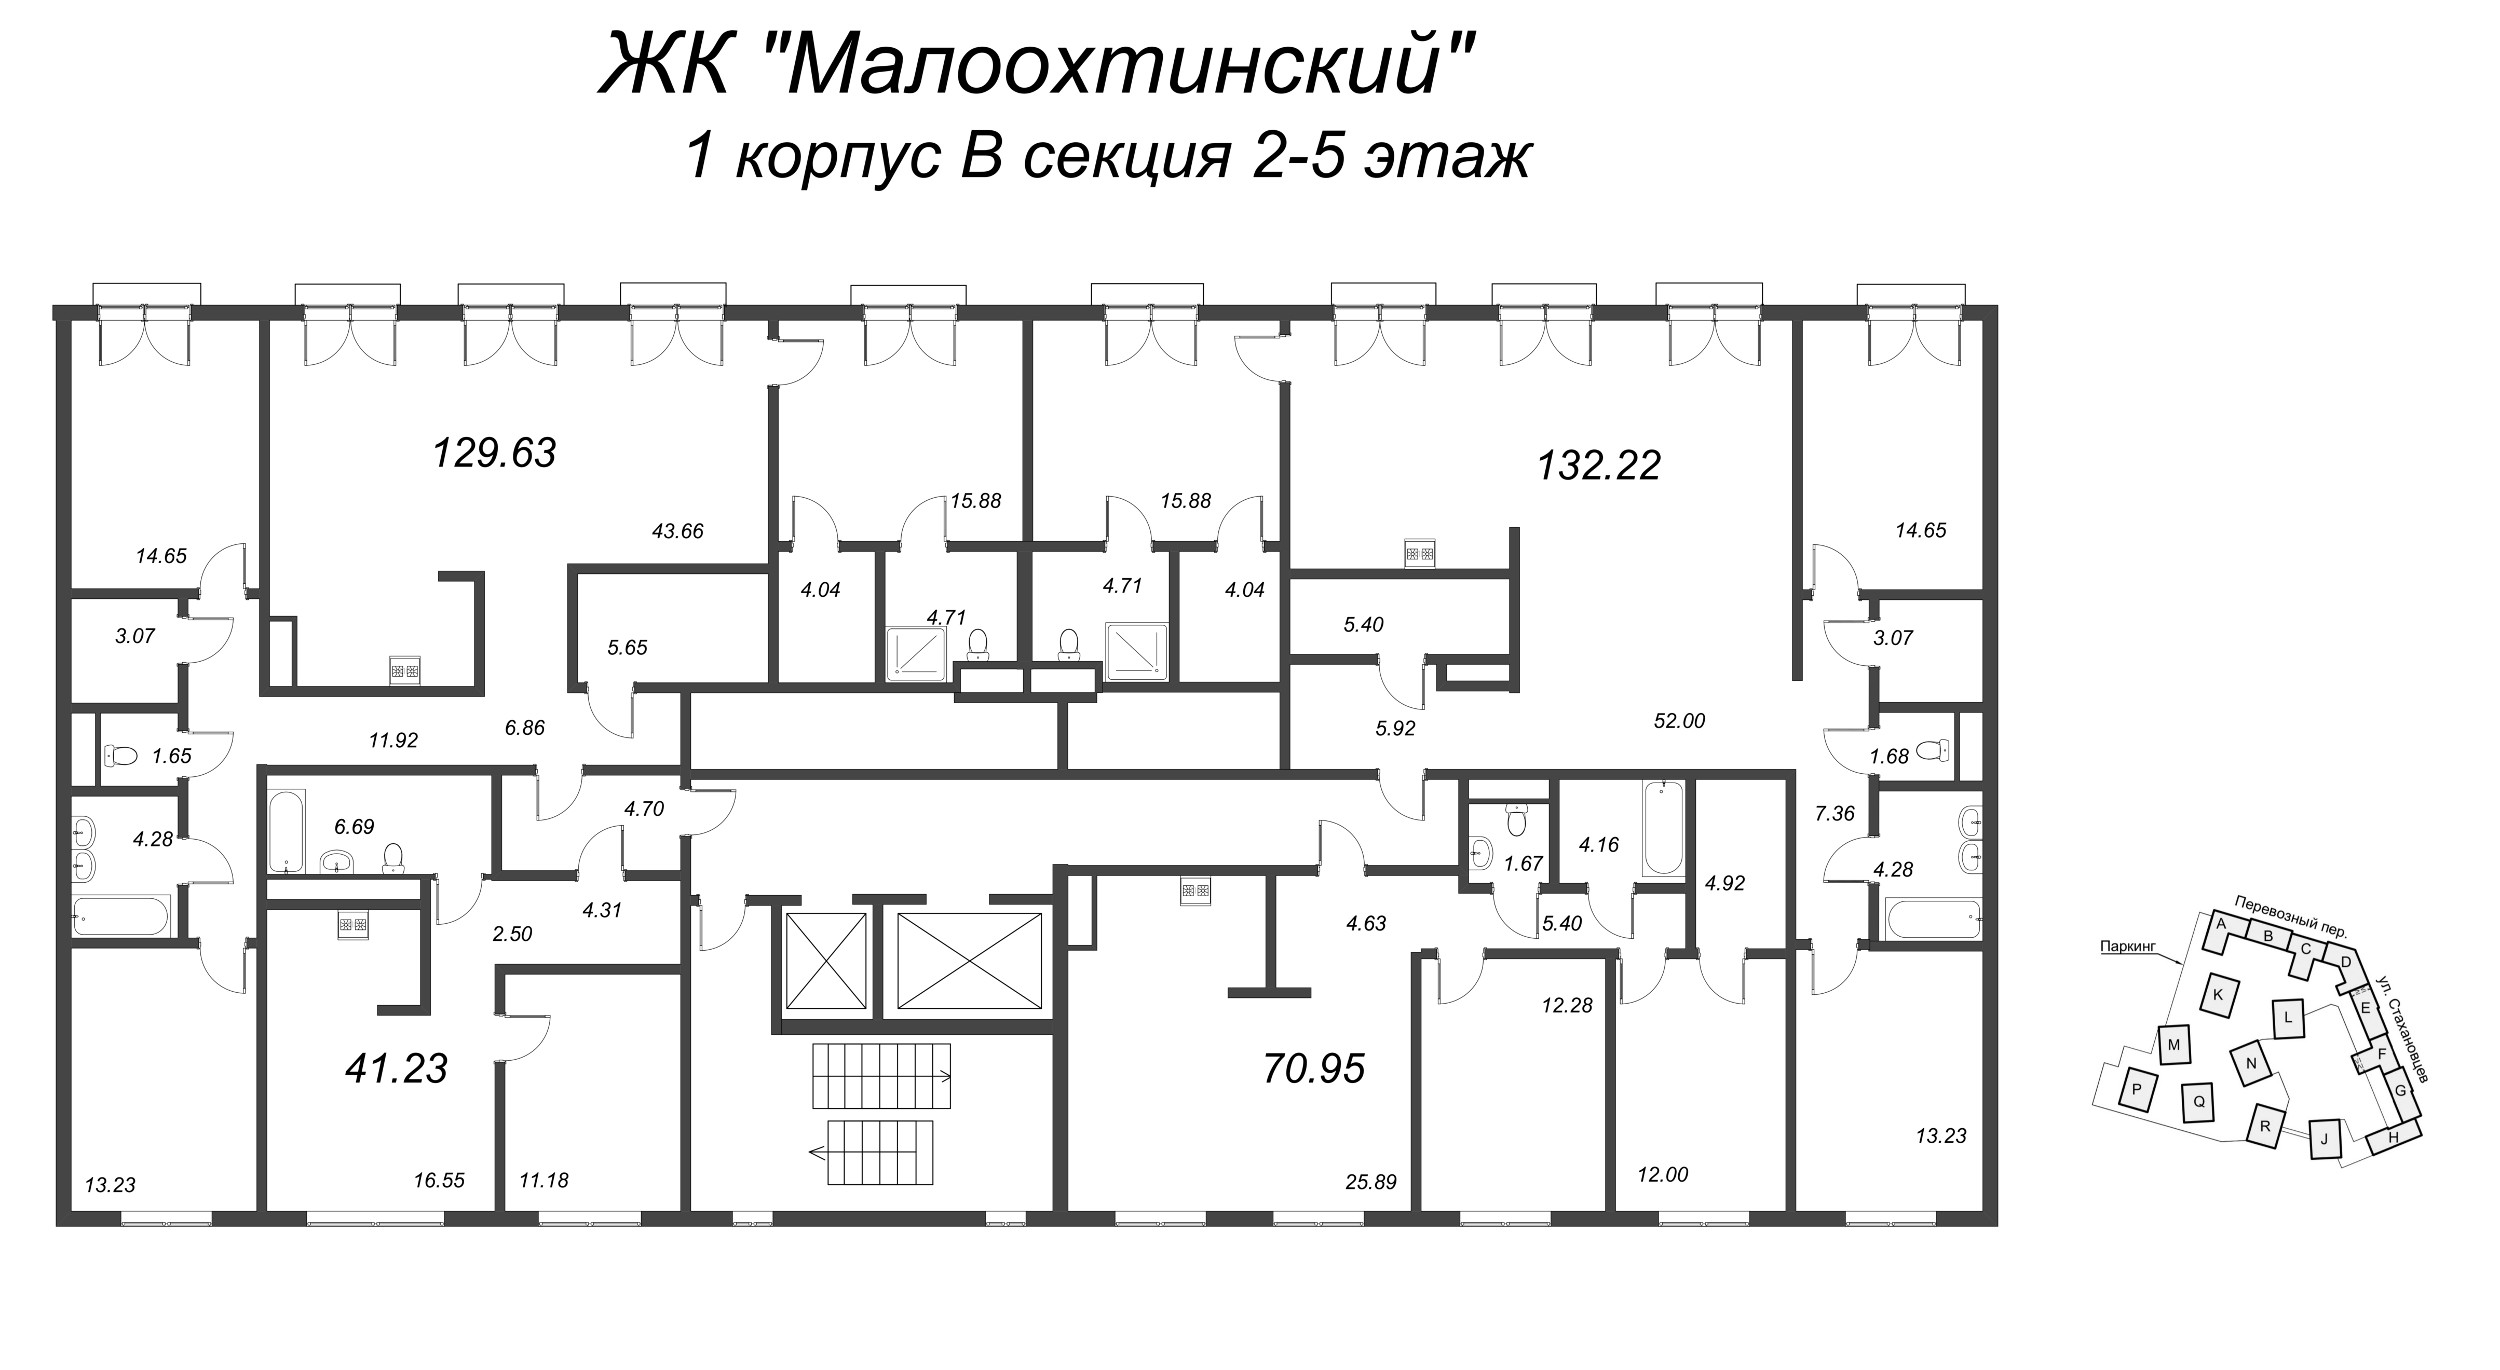 4-комнатная (Евро) квартира, 134.3 м² - планировка этажа